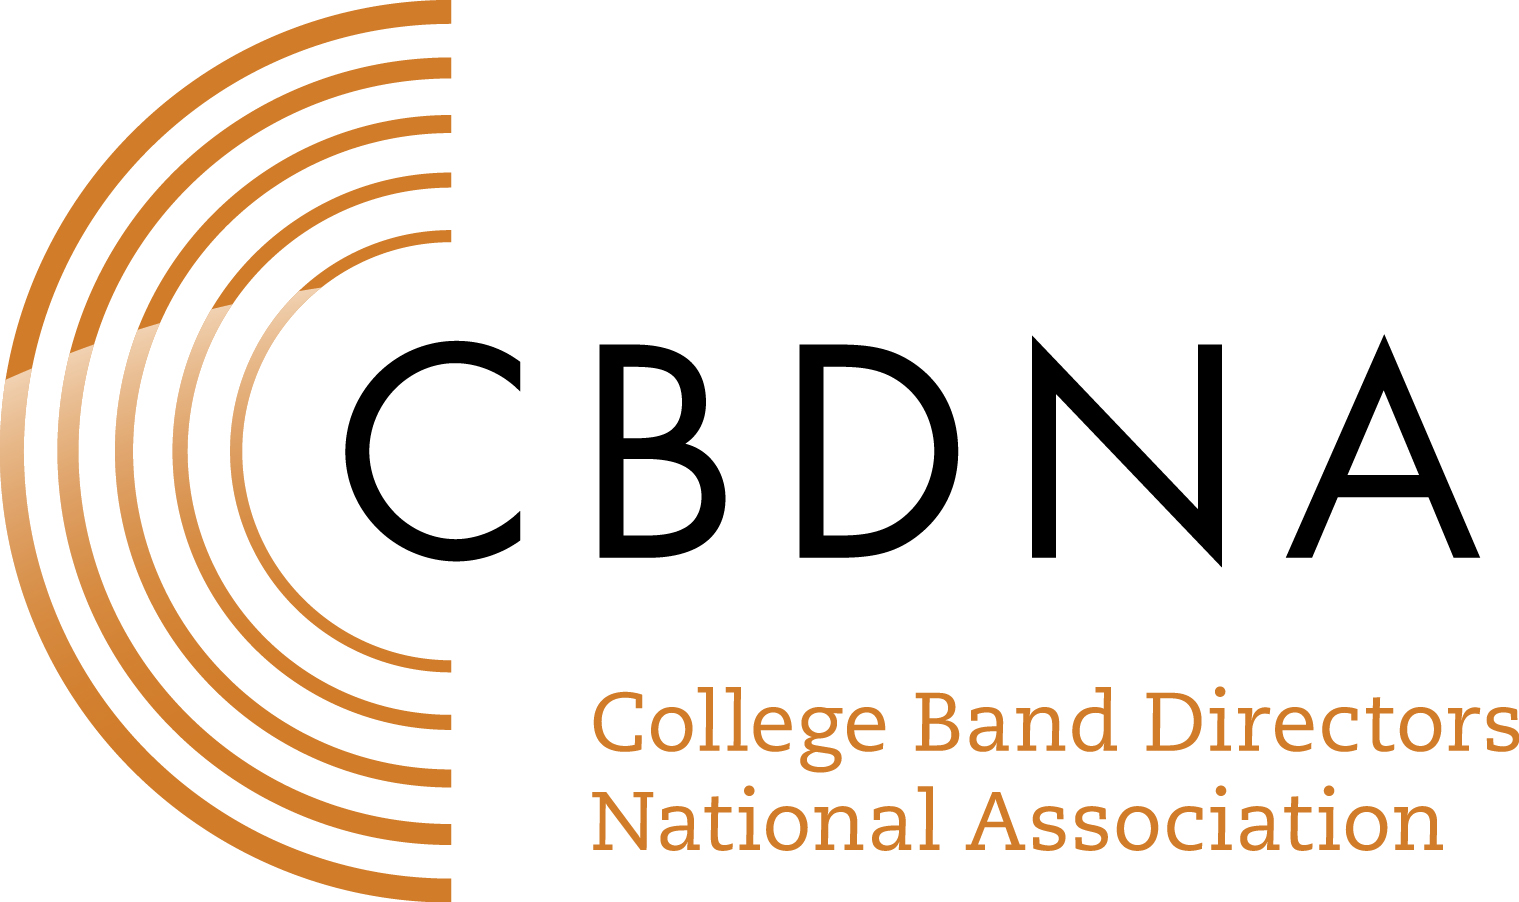 CBDNA College Band Director National Association logo